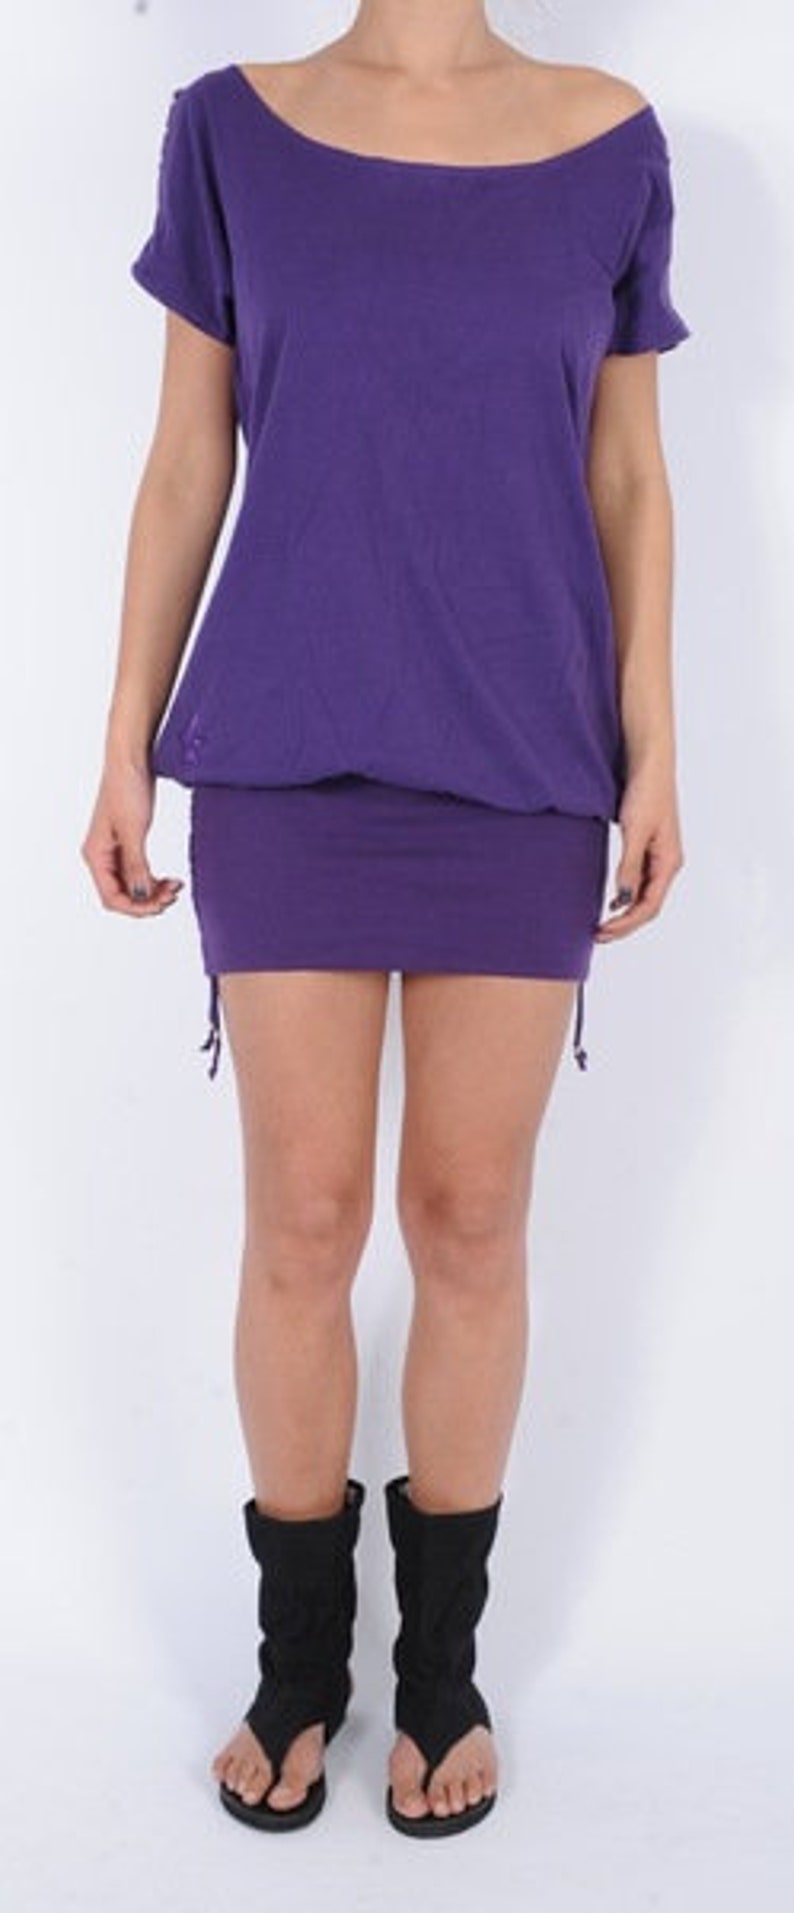 Tunique robe violet dos nu en coton bas extensible et ajustable OSHI image 4